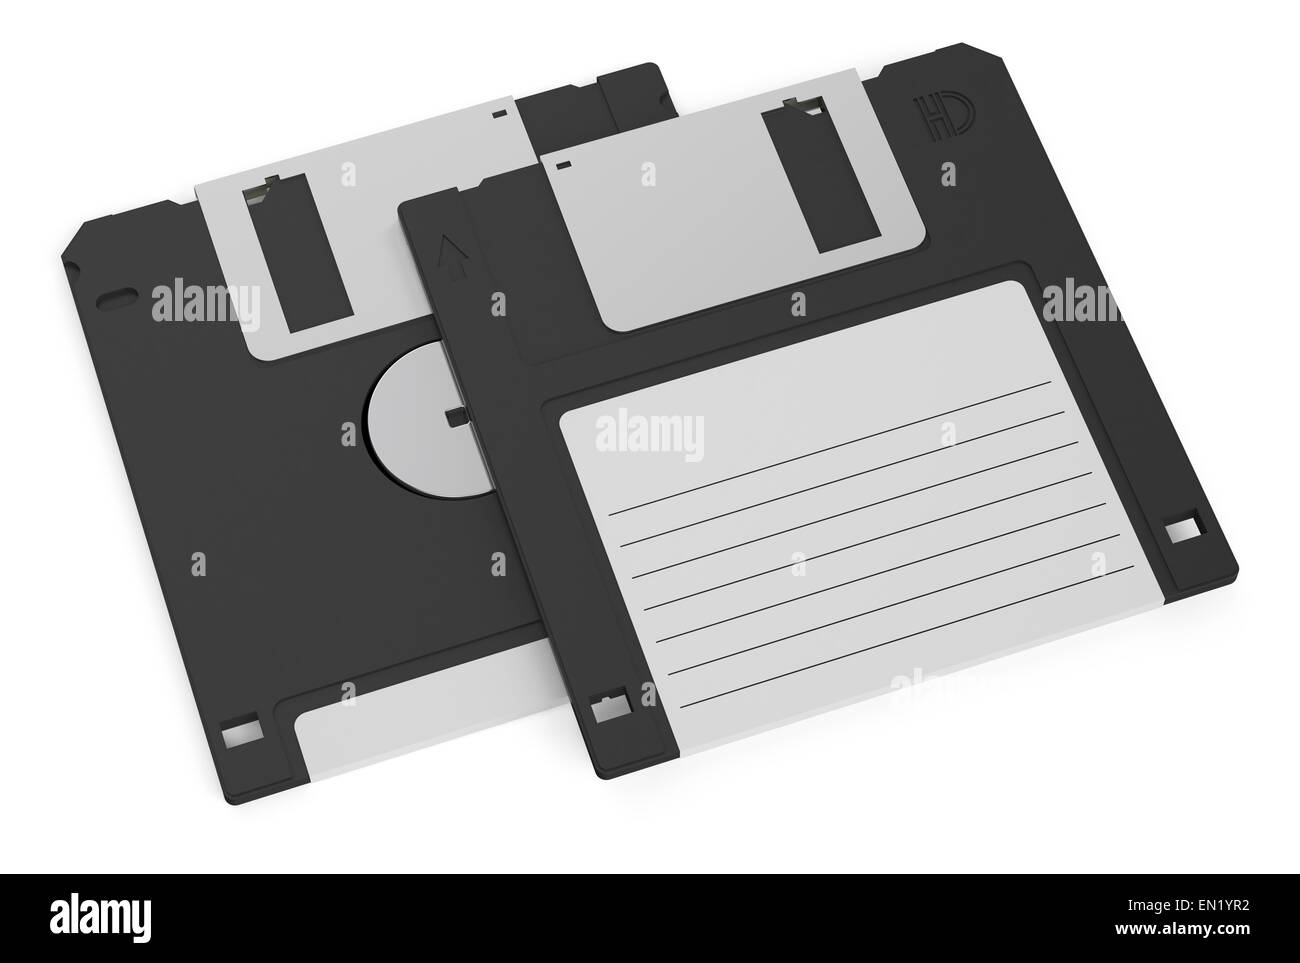 black floppy disks isolated on white background Stock Photo